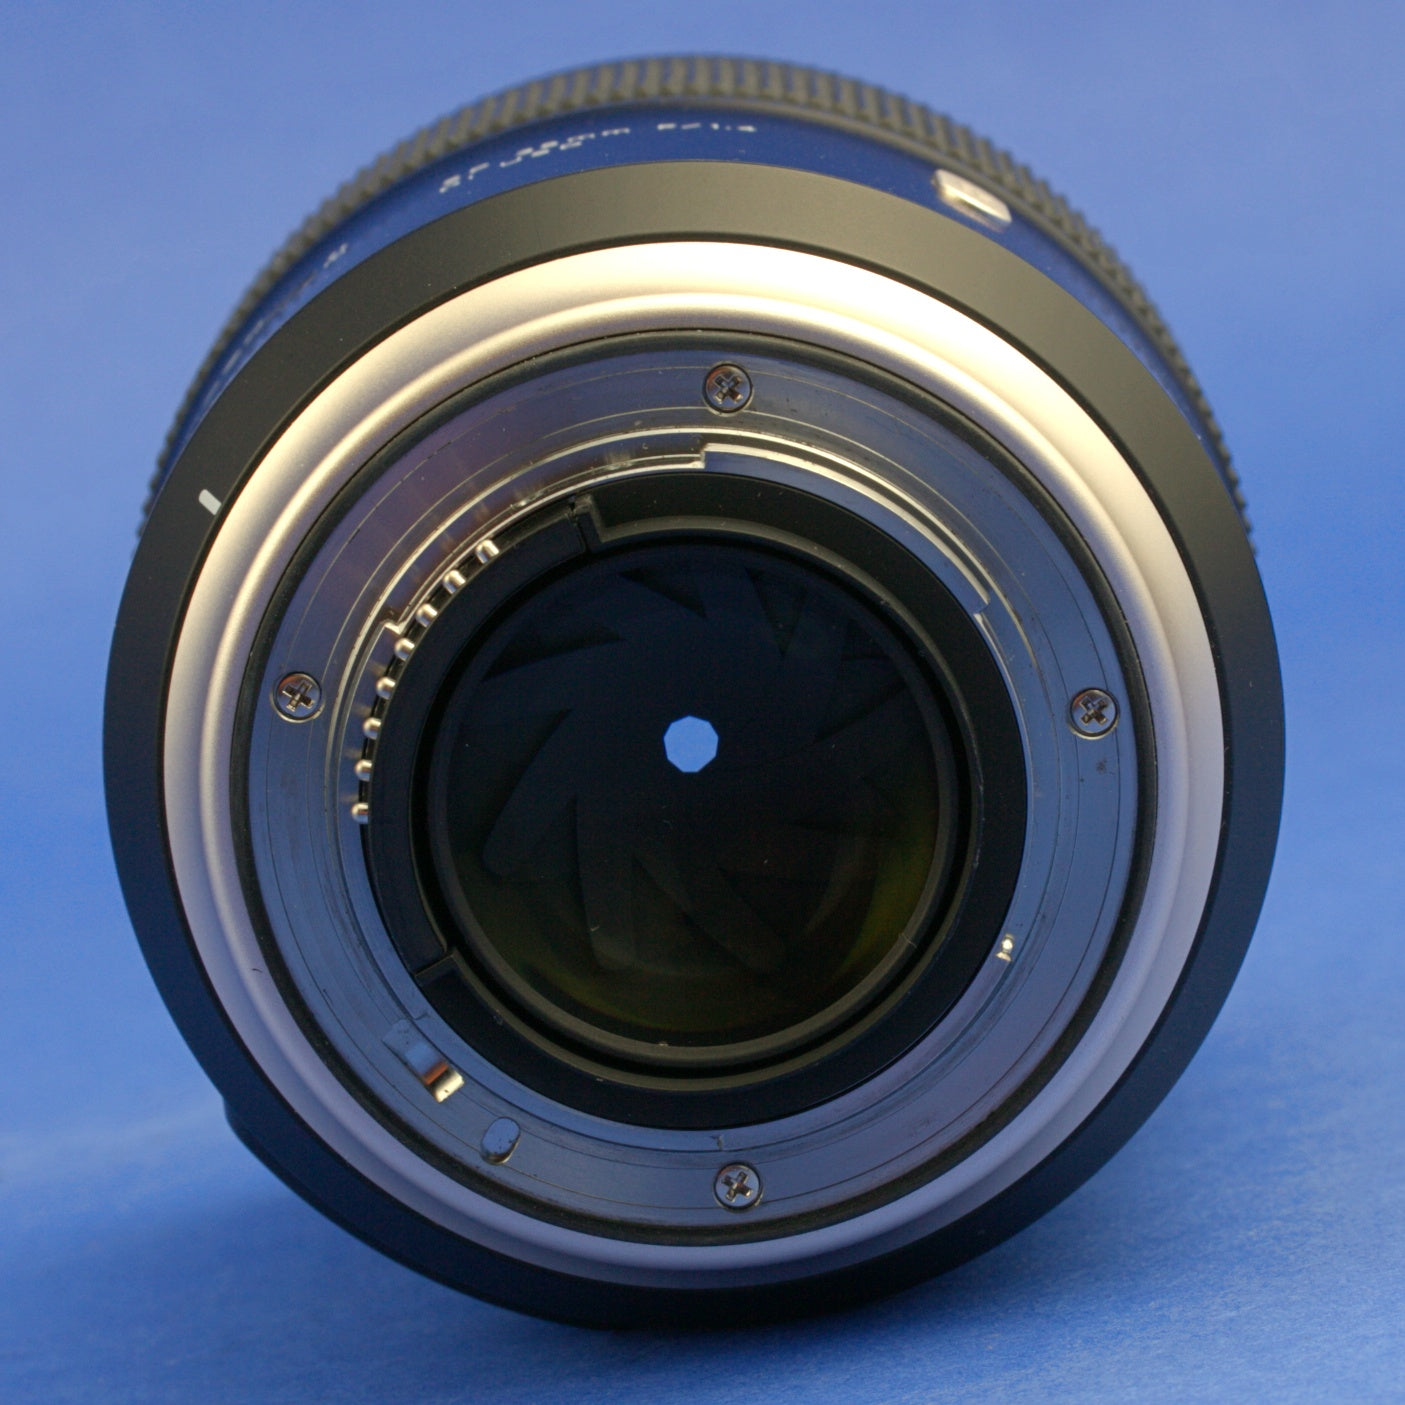 Nikon AF Mount Tamron 35mm 1.4 SP Di Lens Near Mint Condition